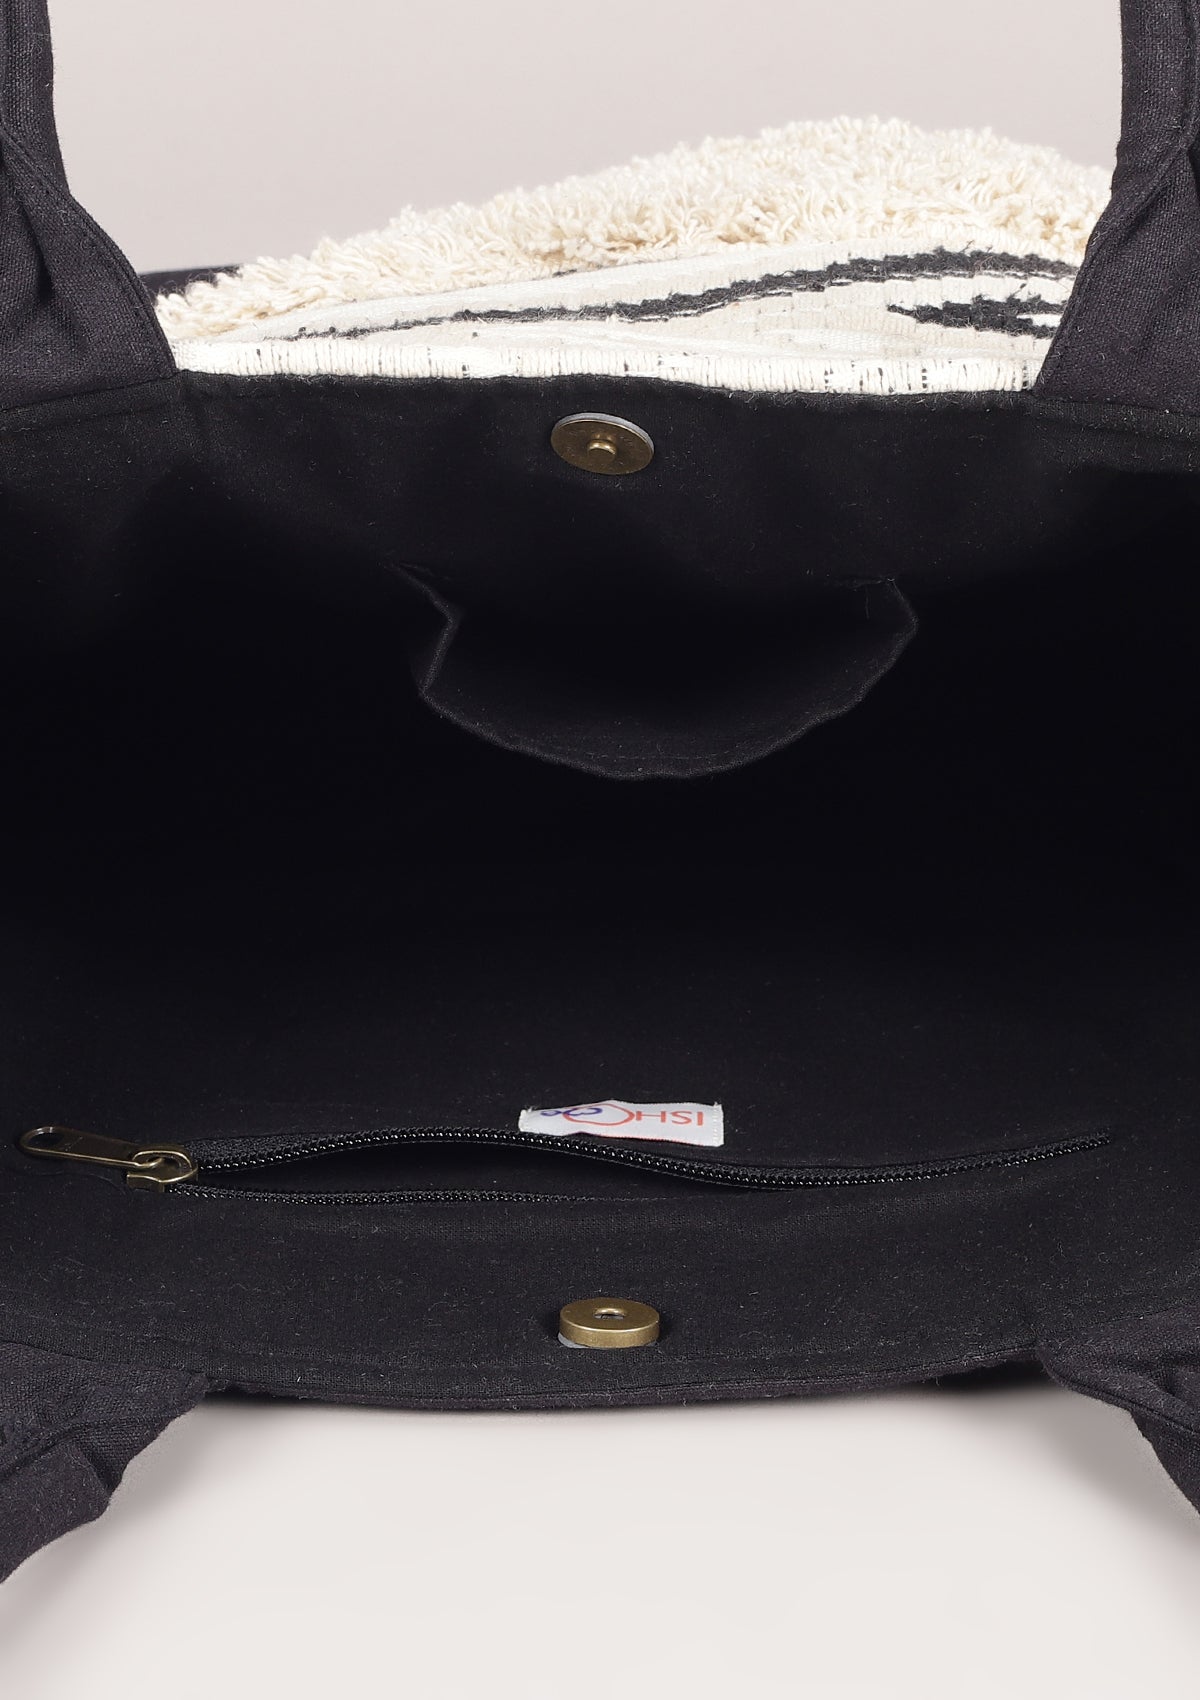 Monochrome Elegant Tote Bag - IshqMe